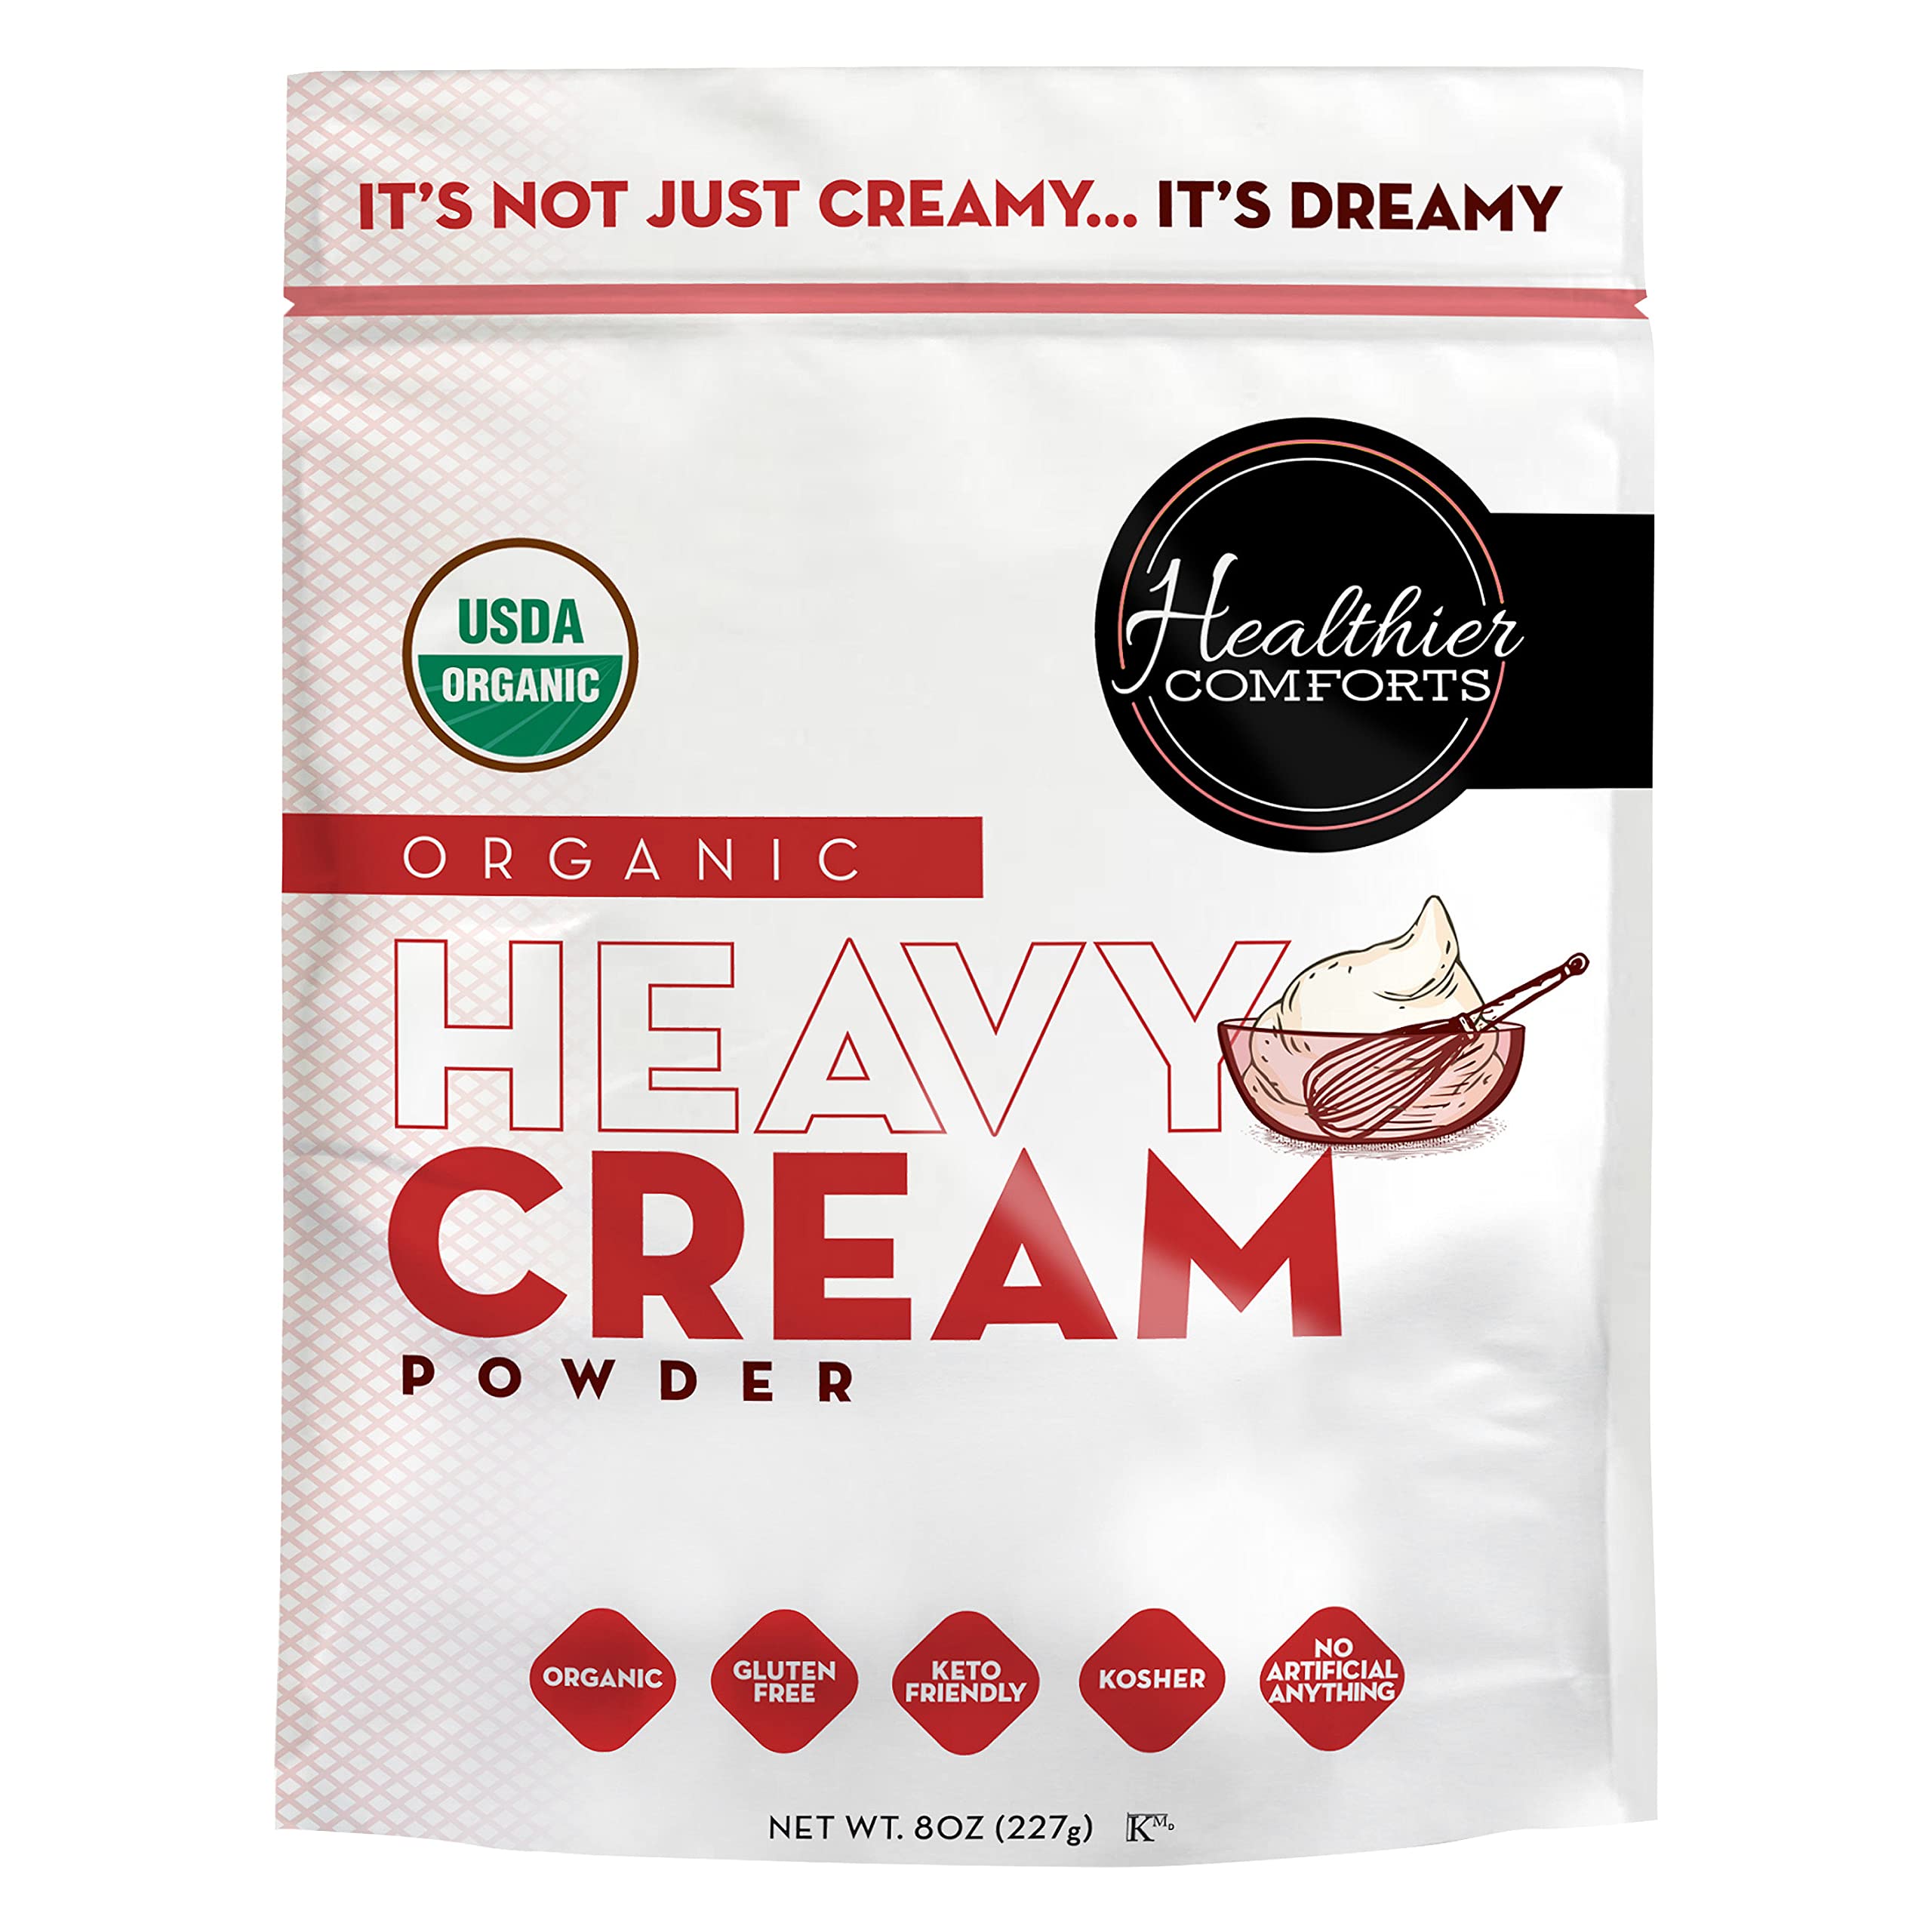 Heavy Cream Powder: Batch Tested Gluten-Free, Made in USA